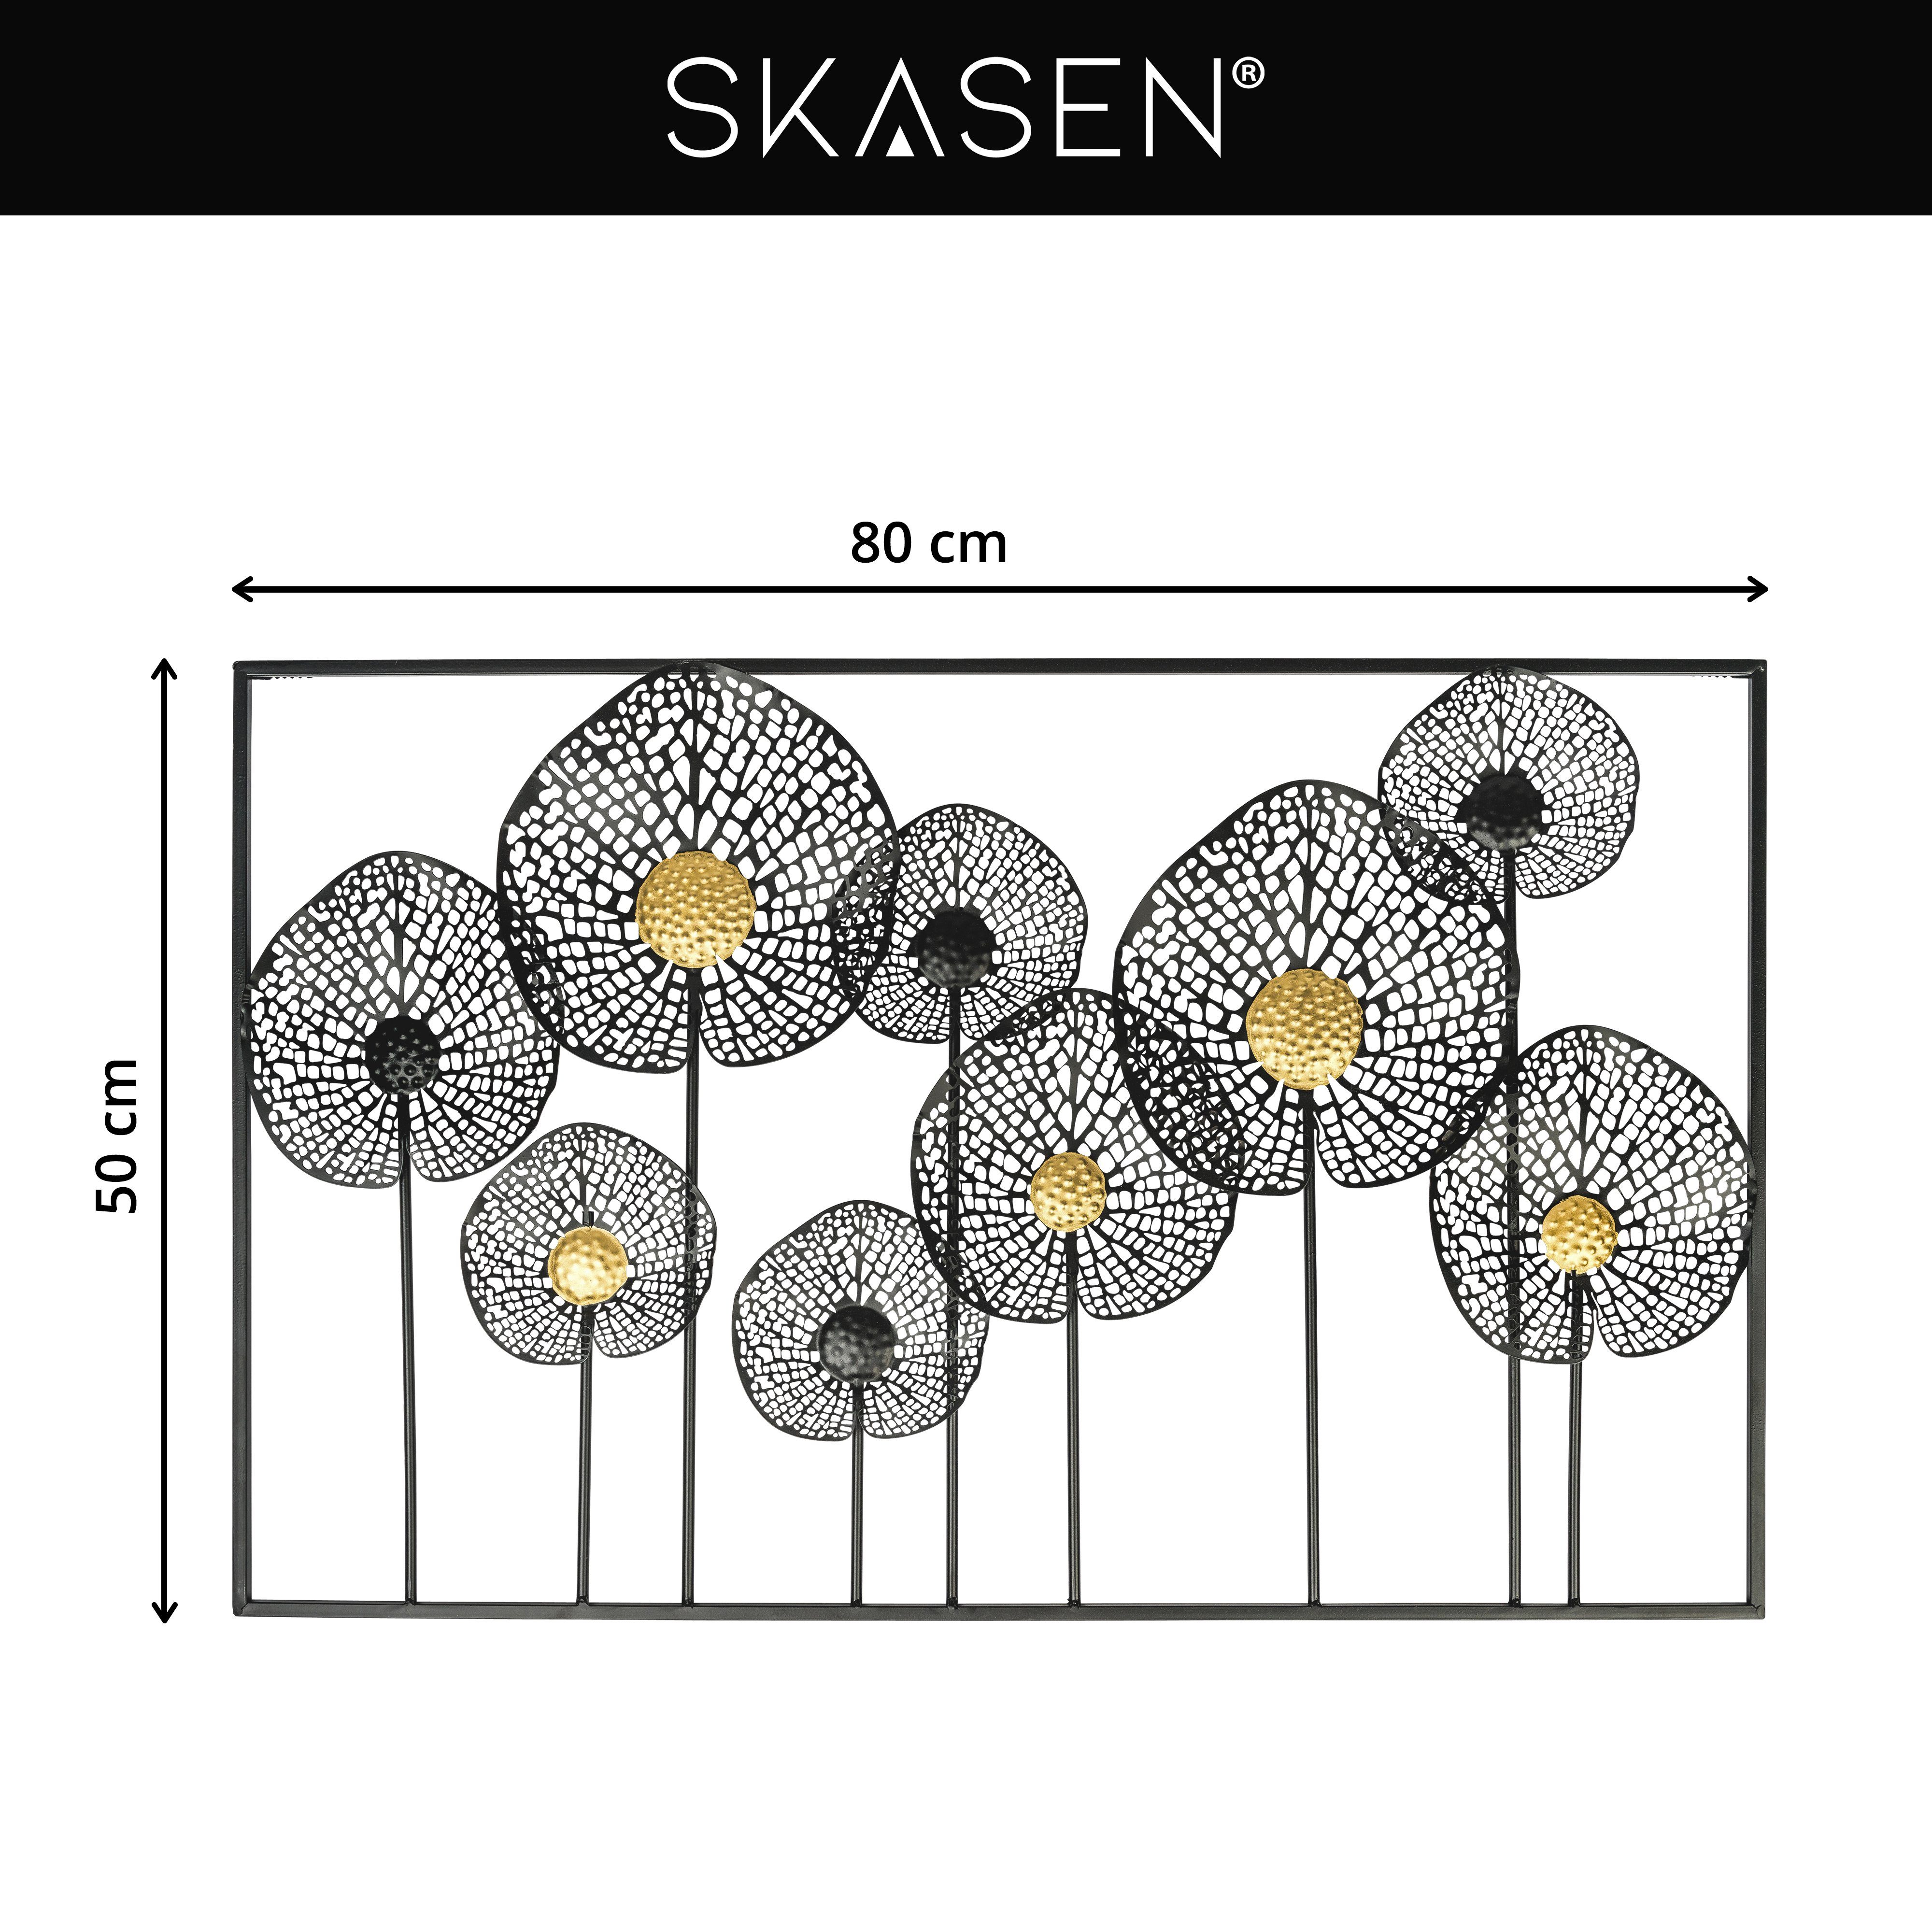 SKASEN Metallbild Wandbild, inkl. Blumen Befestigungsmaterial, 80x50cm, \